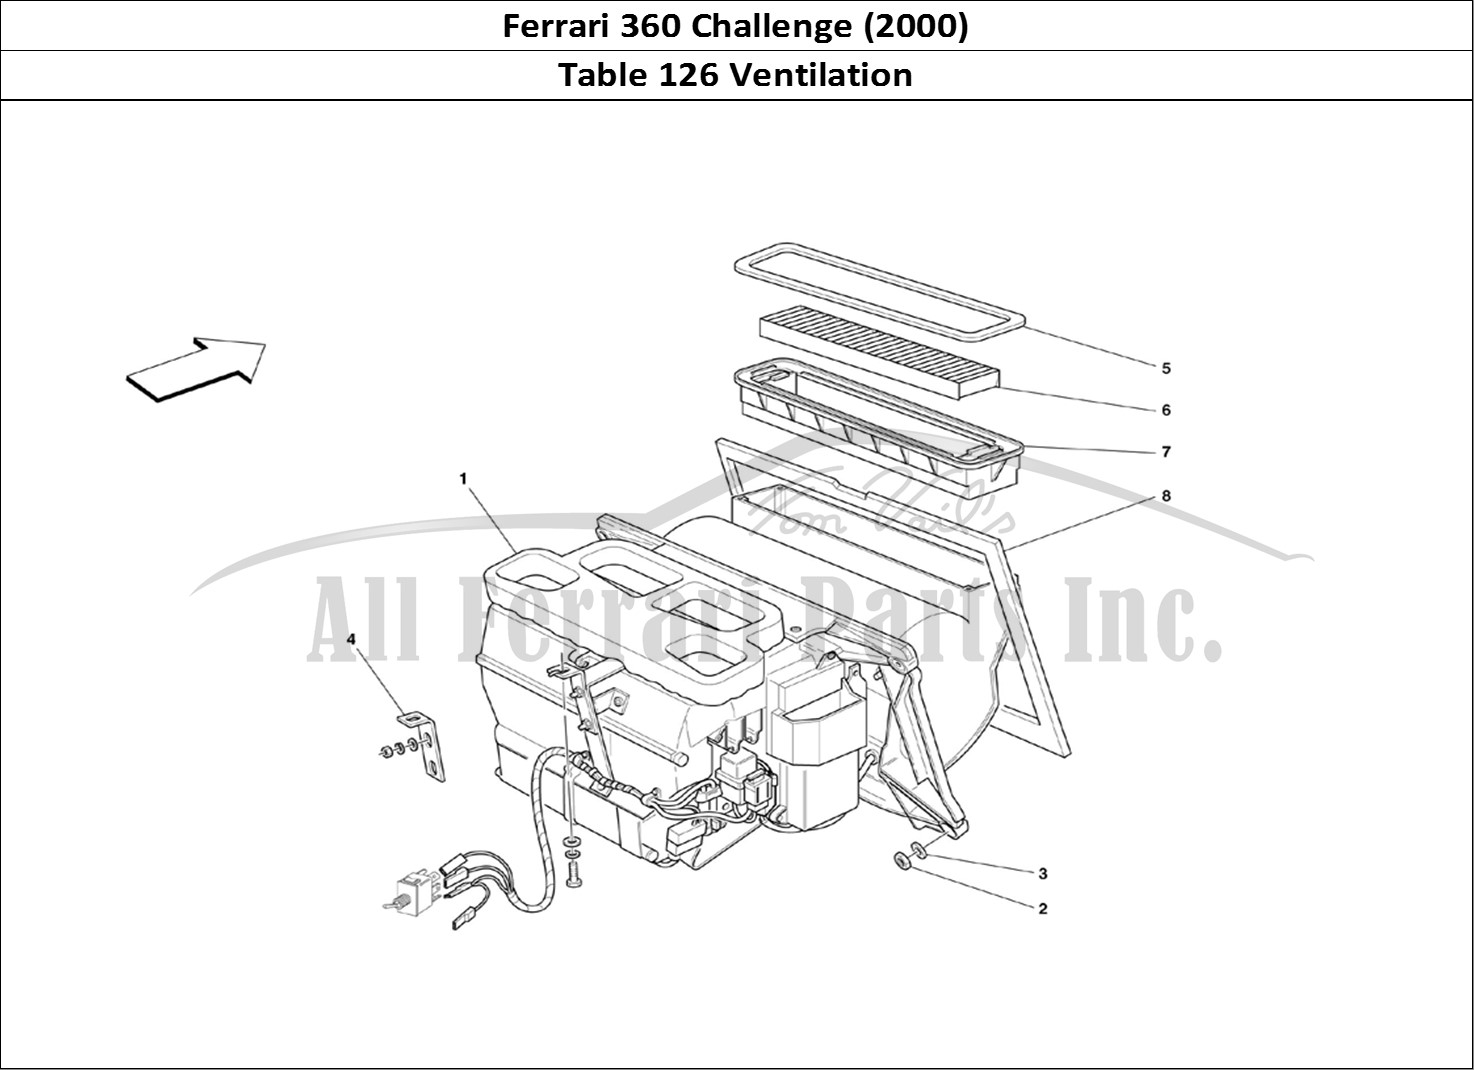 Ferrari Parts Ferrari 360 Challenge (2000) Page 126 Ventilation Unit